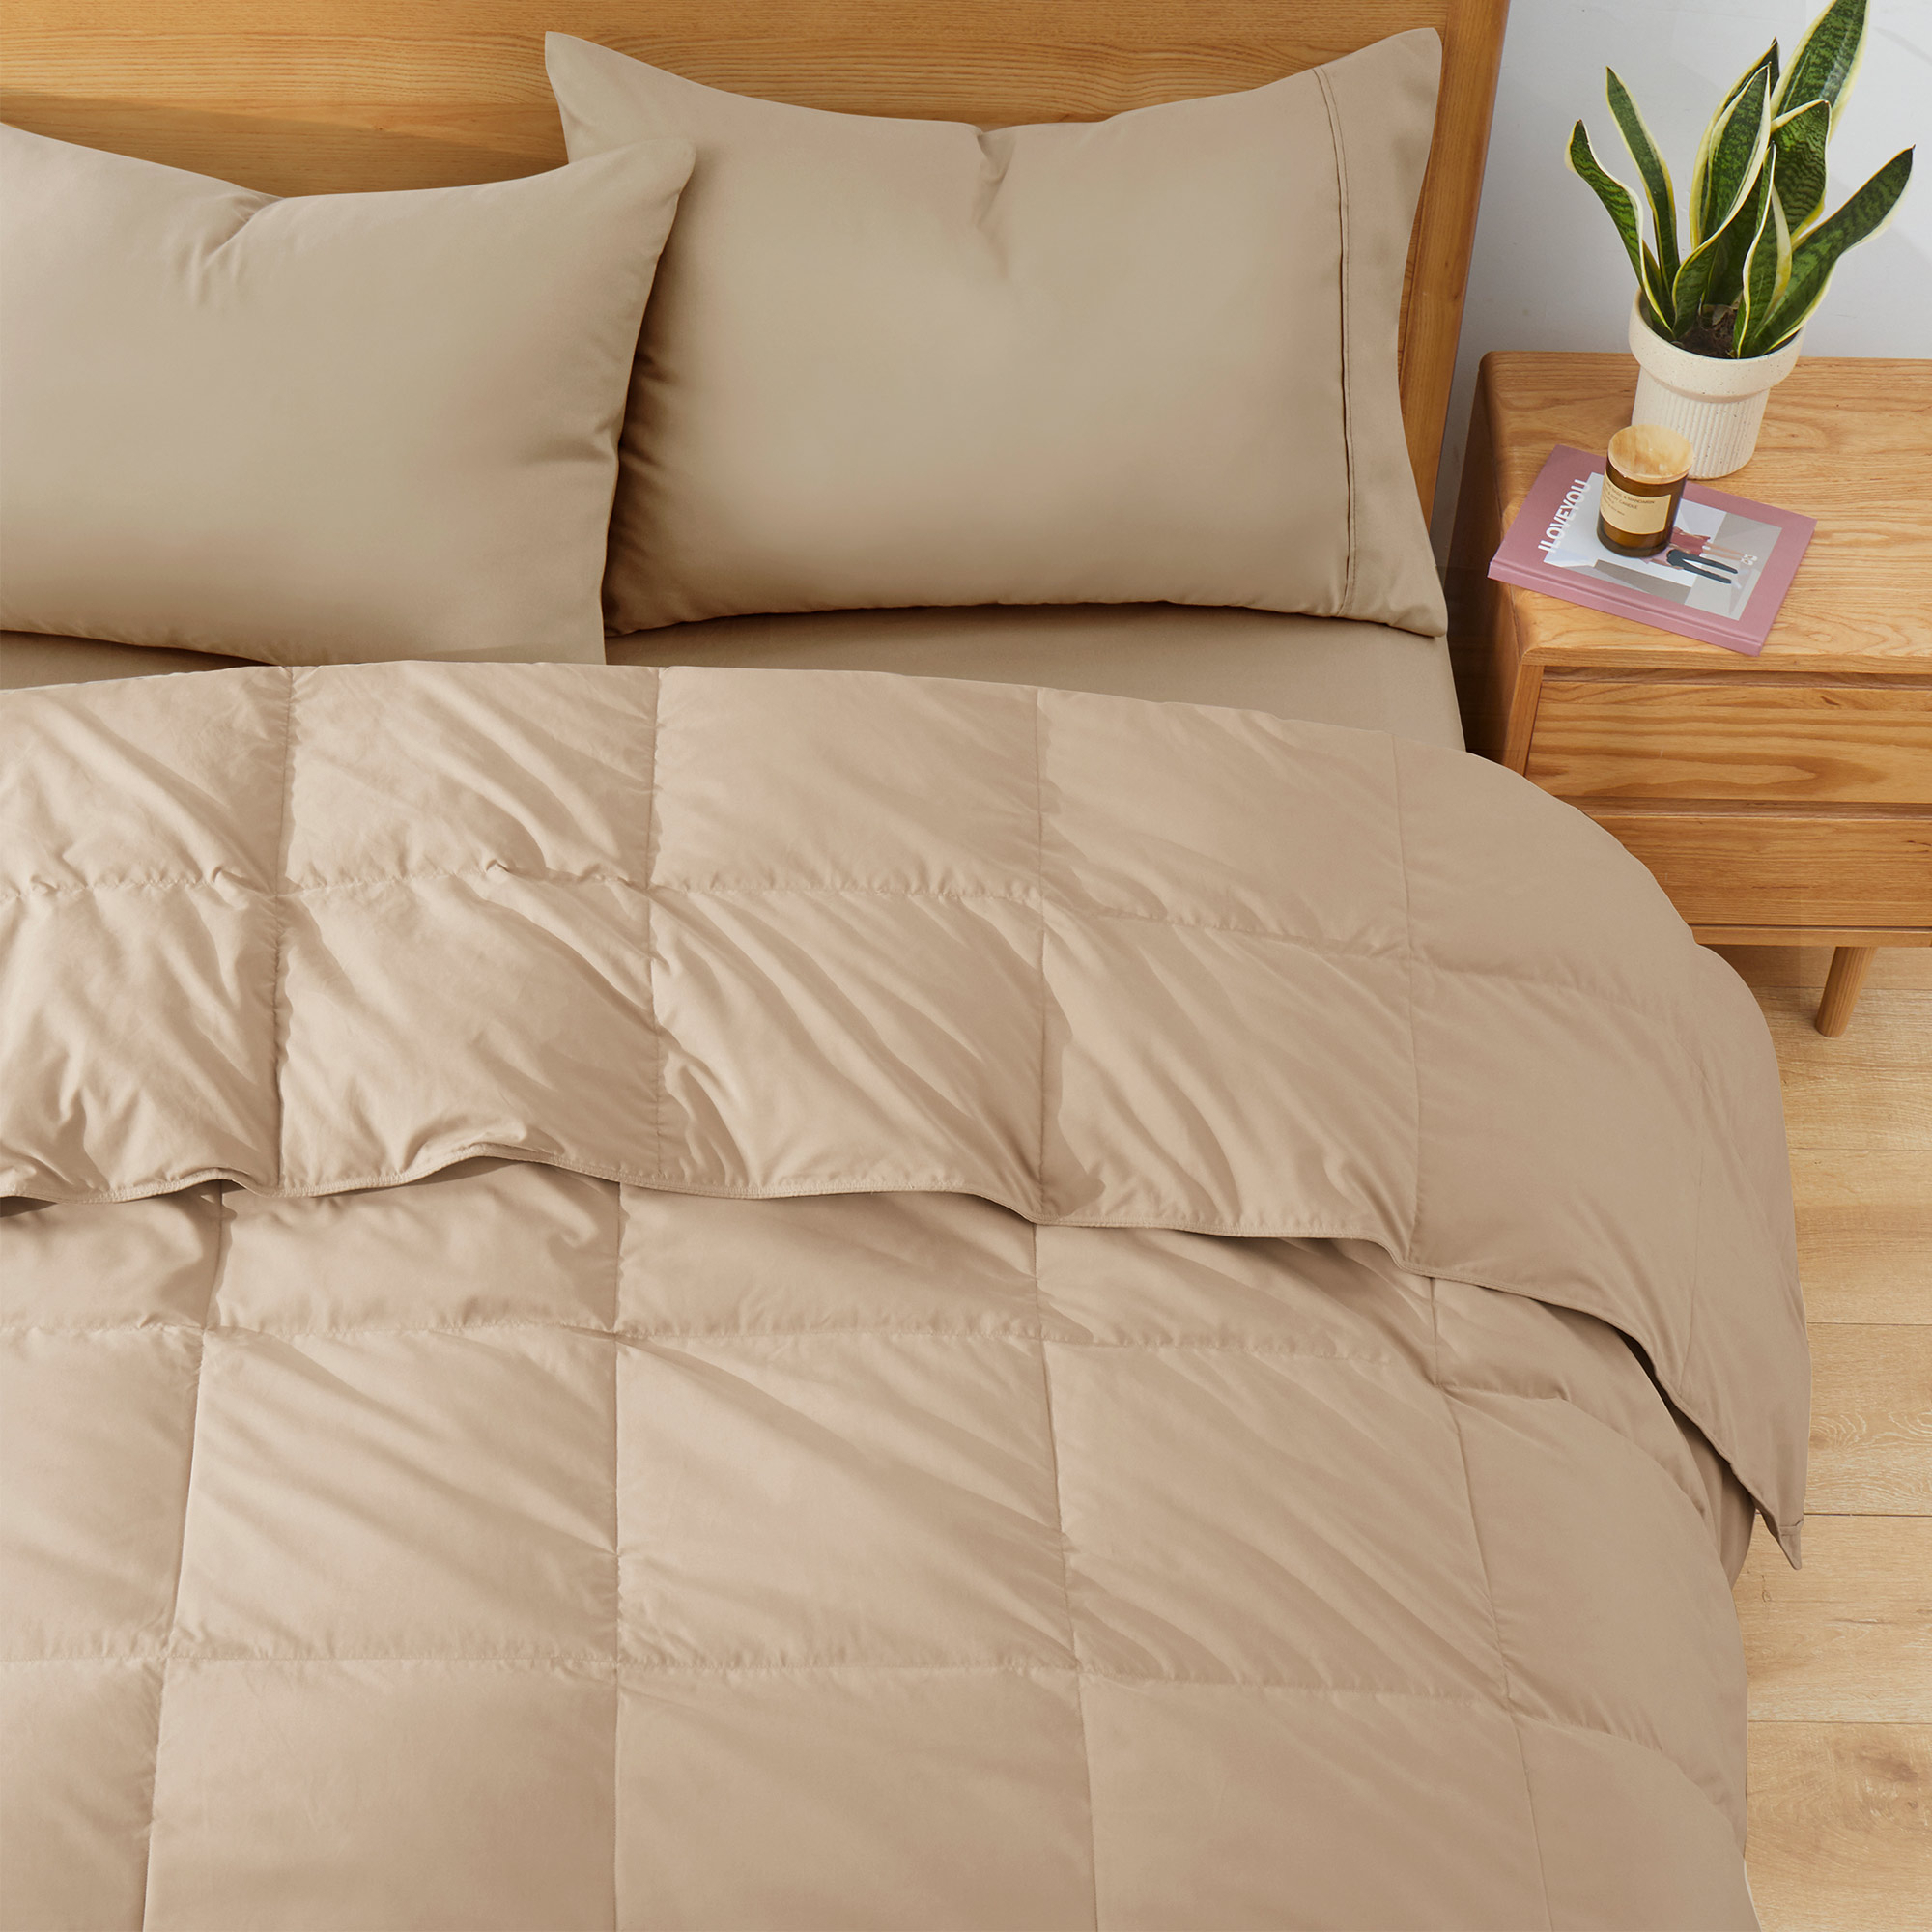 Lightweight Goose Down Feather Fiber Comforter, Soft And Fluffy Comforter For Restful Sleep - King